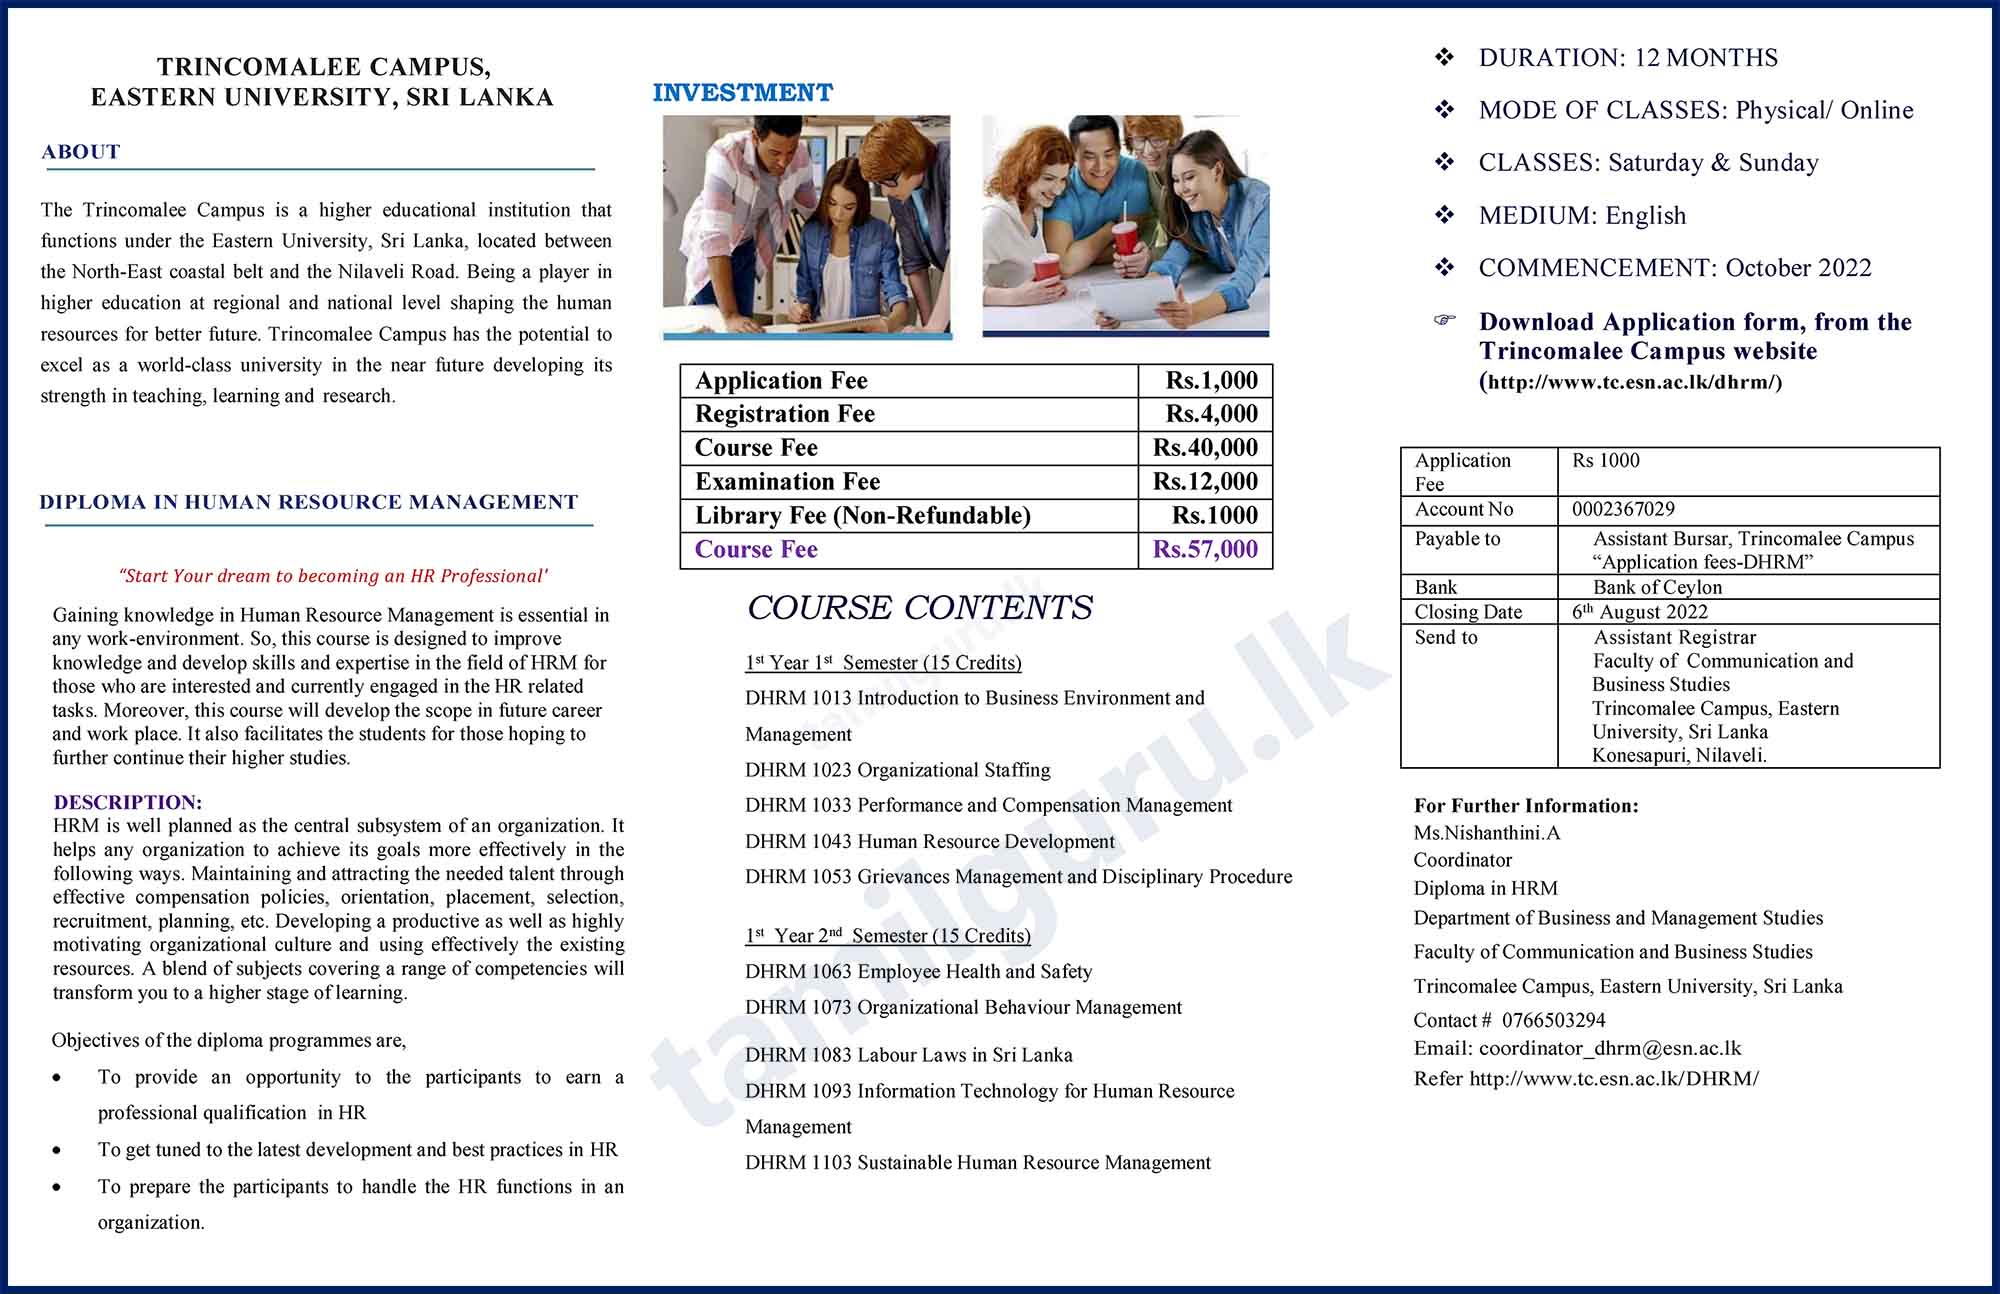 Brochure - Details (Poster) Diploma in Human Resource Management (DHRM) 2022/23 - Trincomalee Campus, Eastern University, Sri Lanka (EUSL)